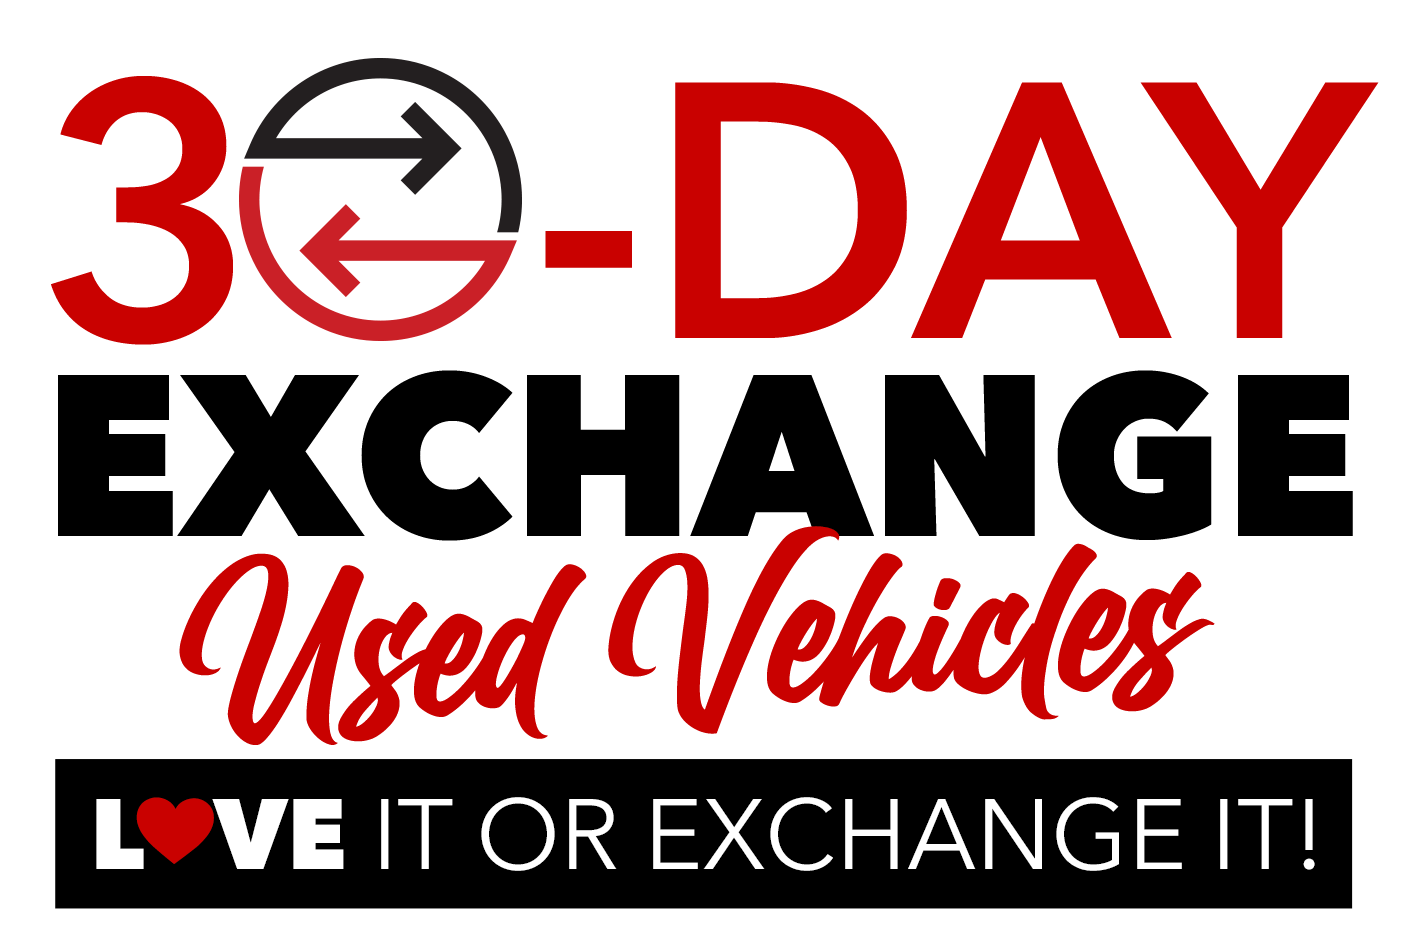 Used 30-day exchange logo